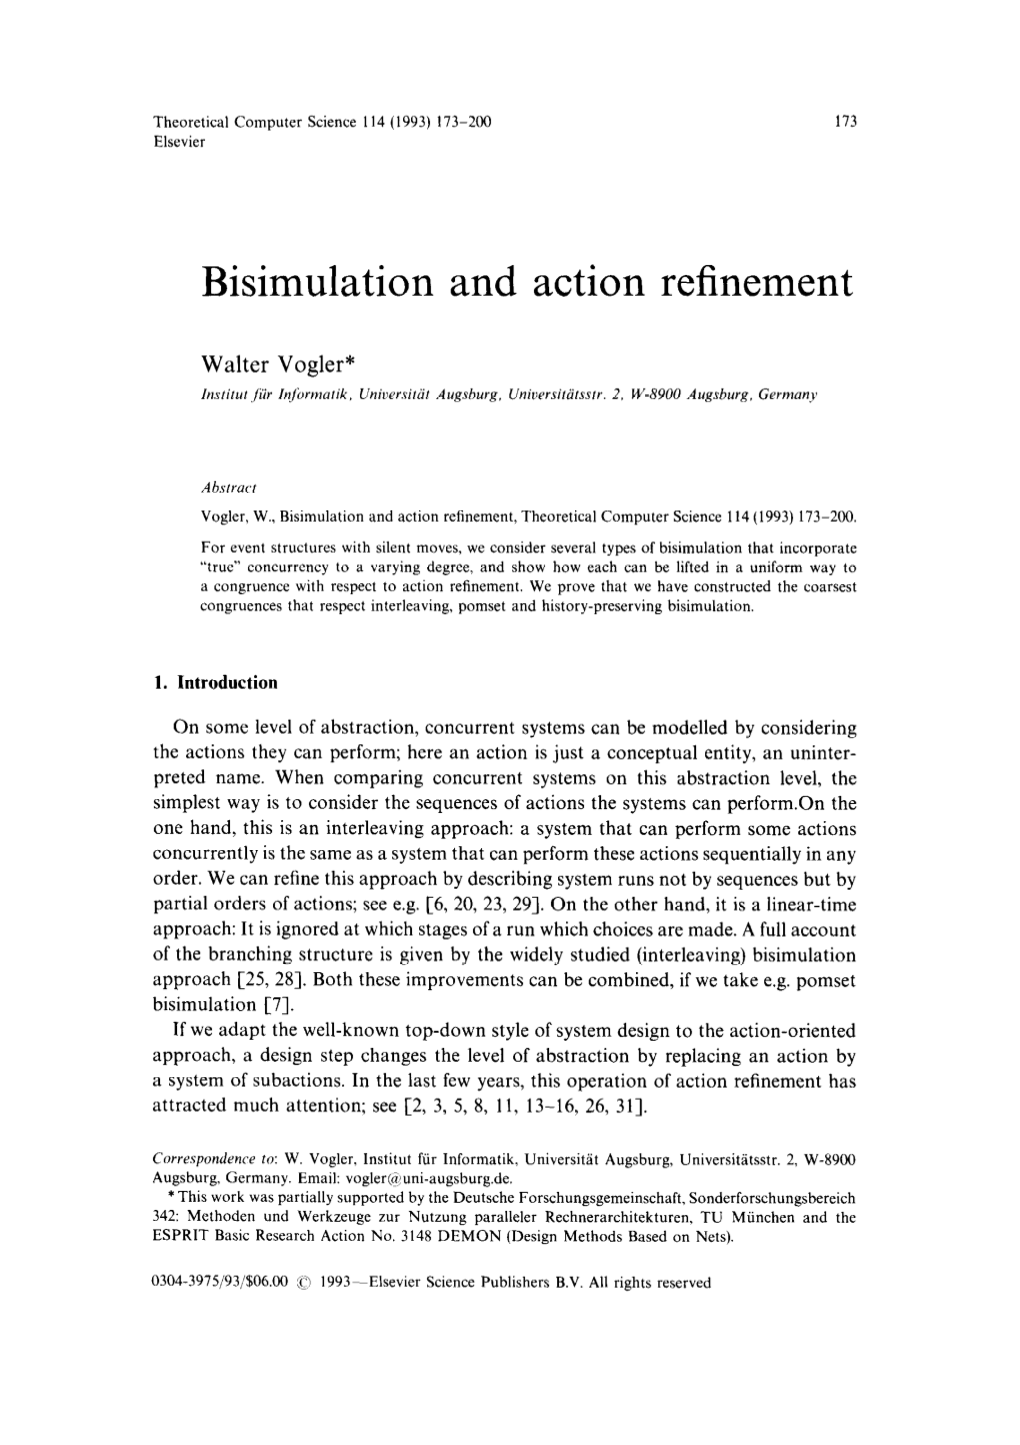 Bisimulation and Action Refinement